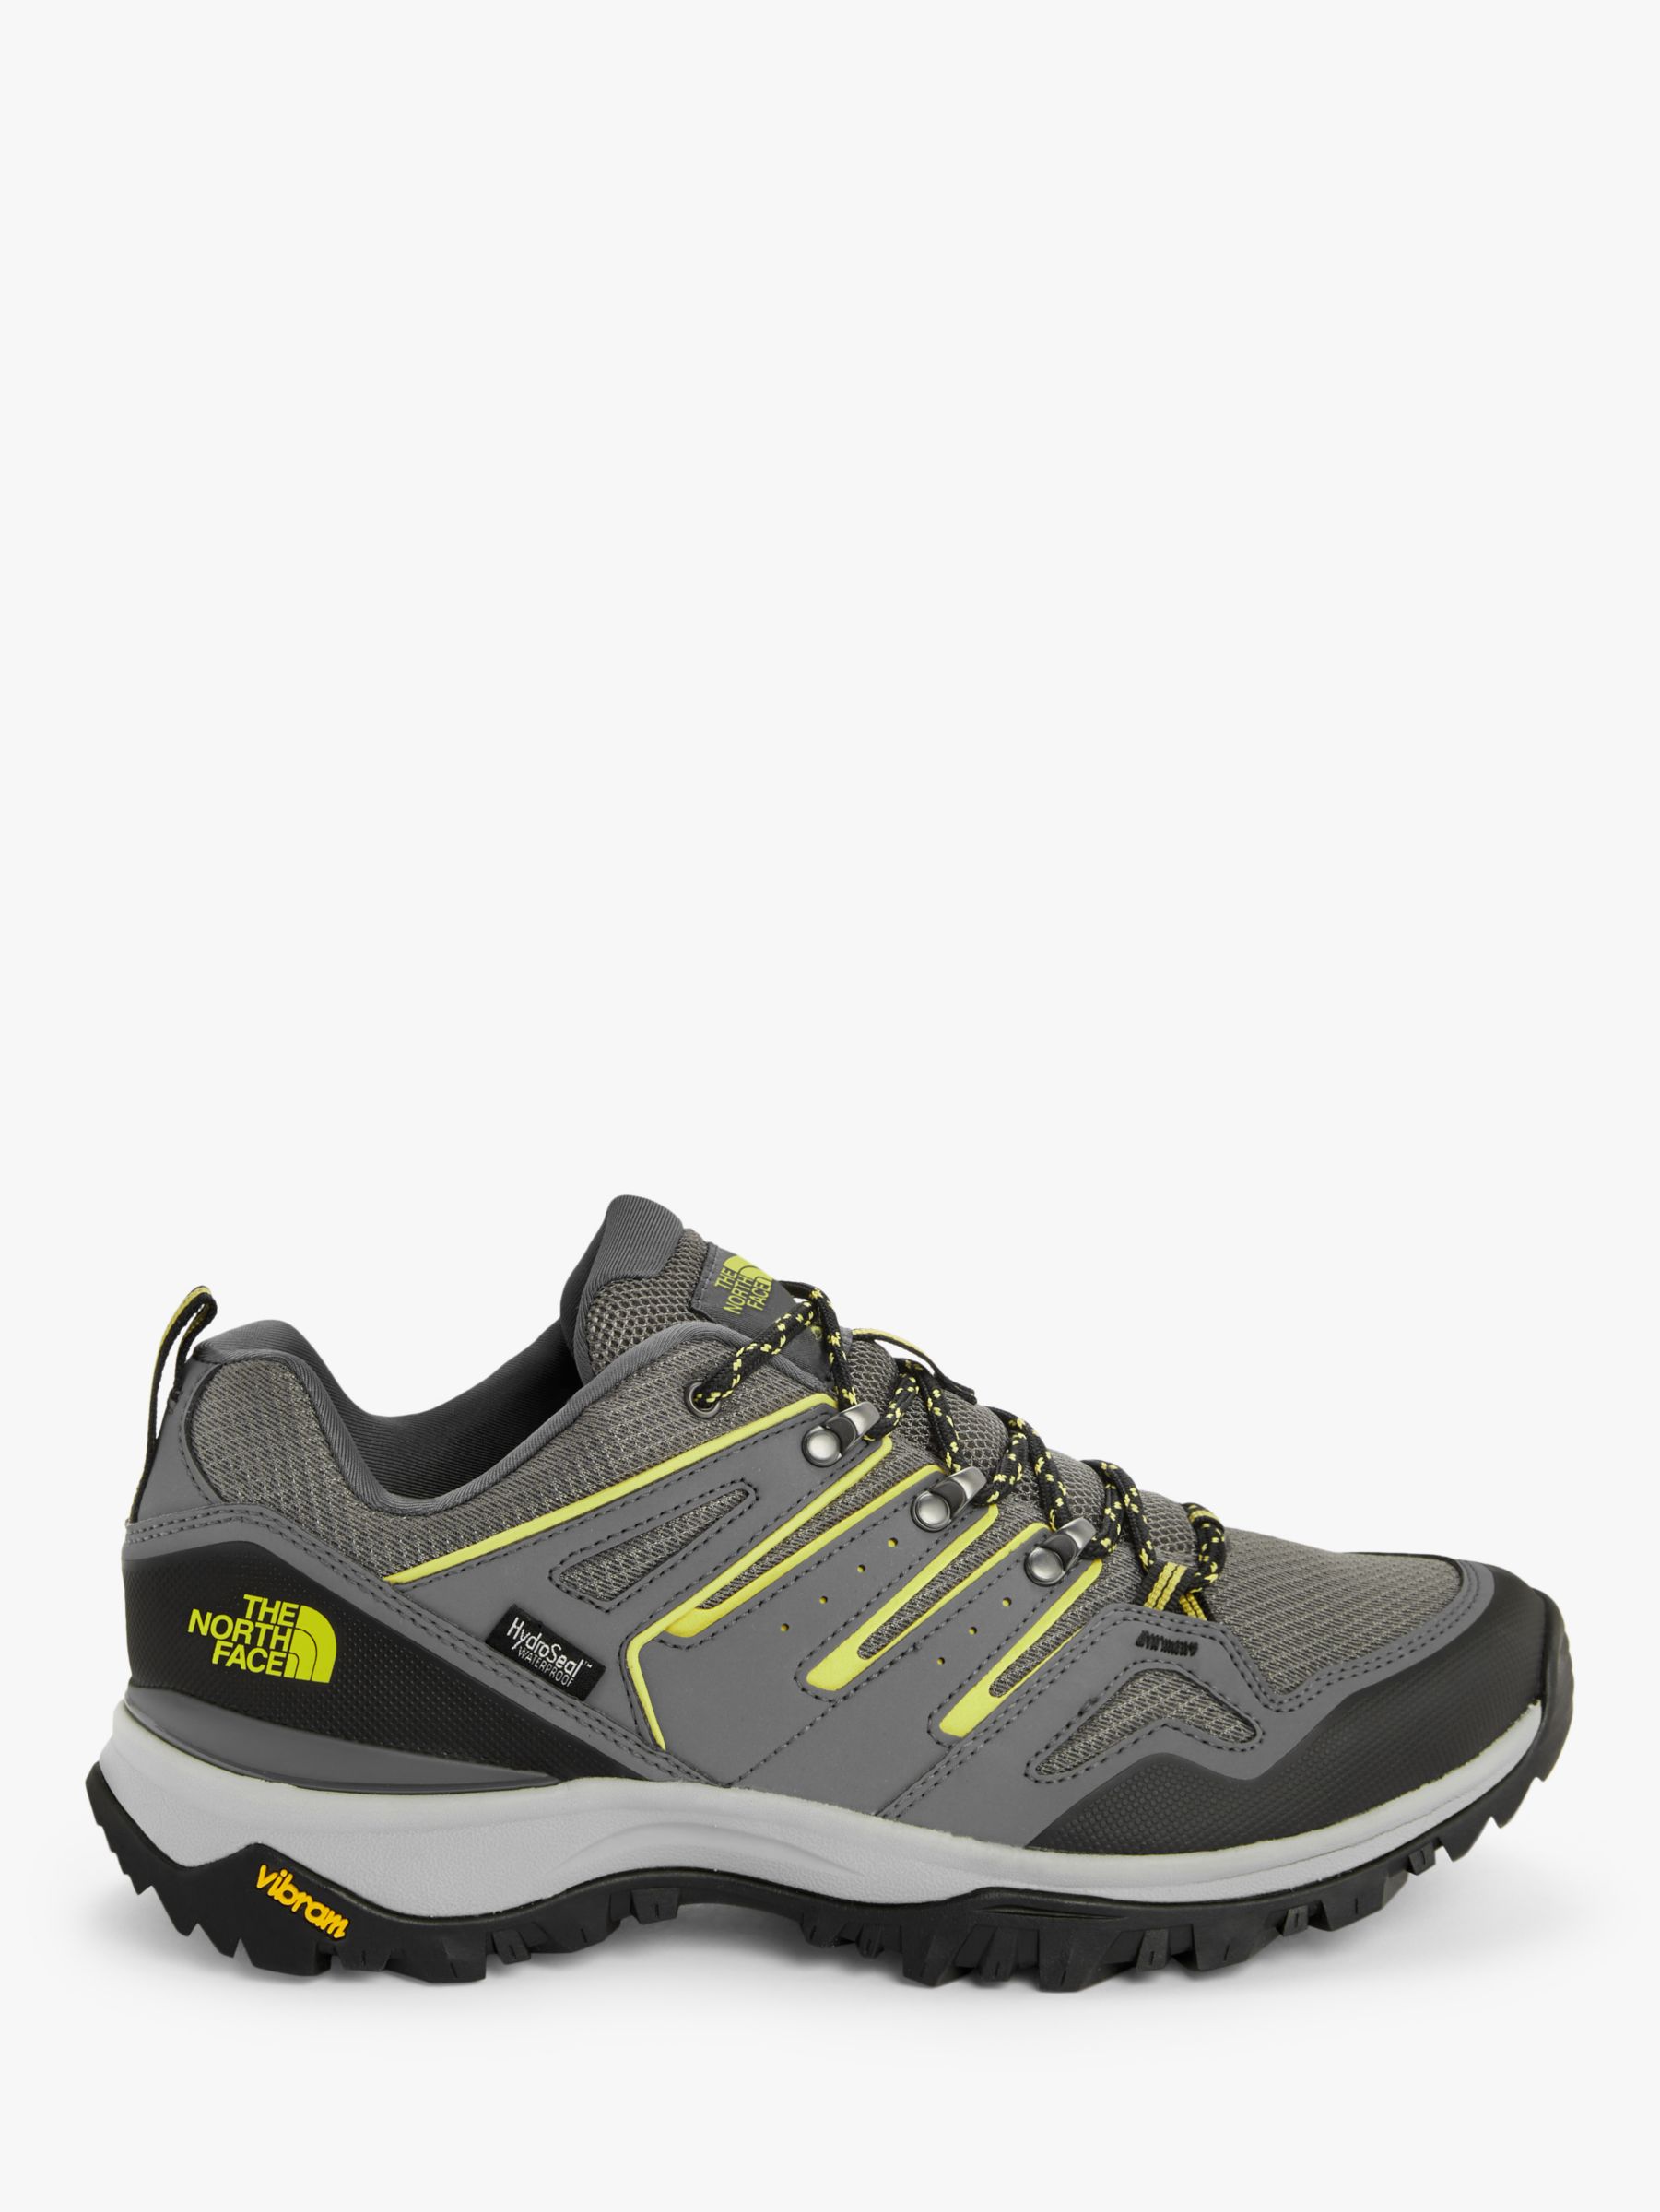 The North Face Hedgehog Fastpack II Men's Waterproof Hiking Shoes, Zinc Grey/Yellow